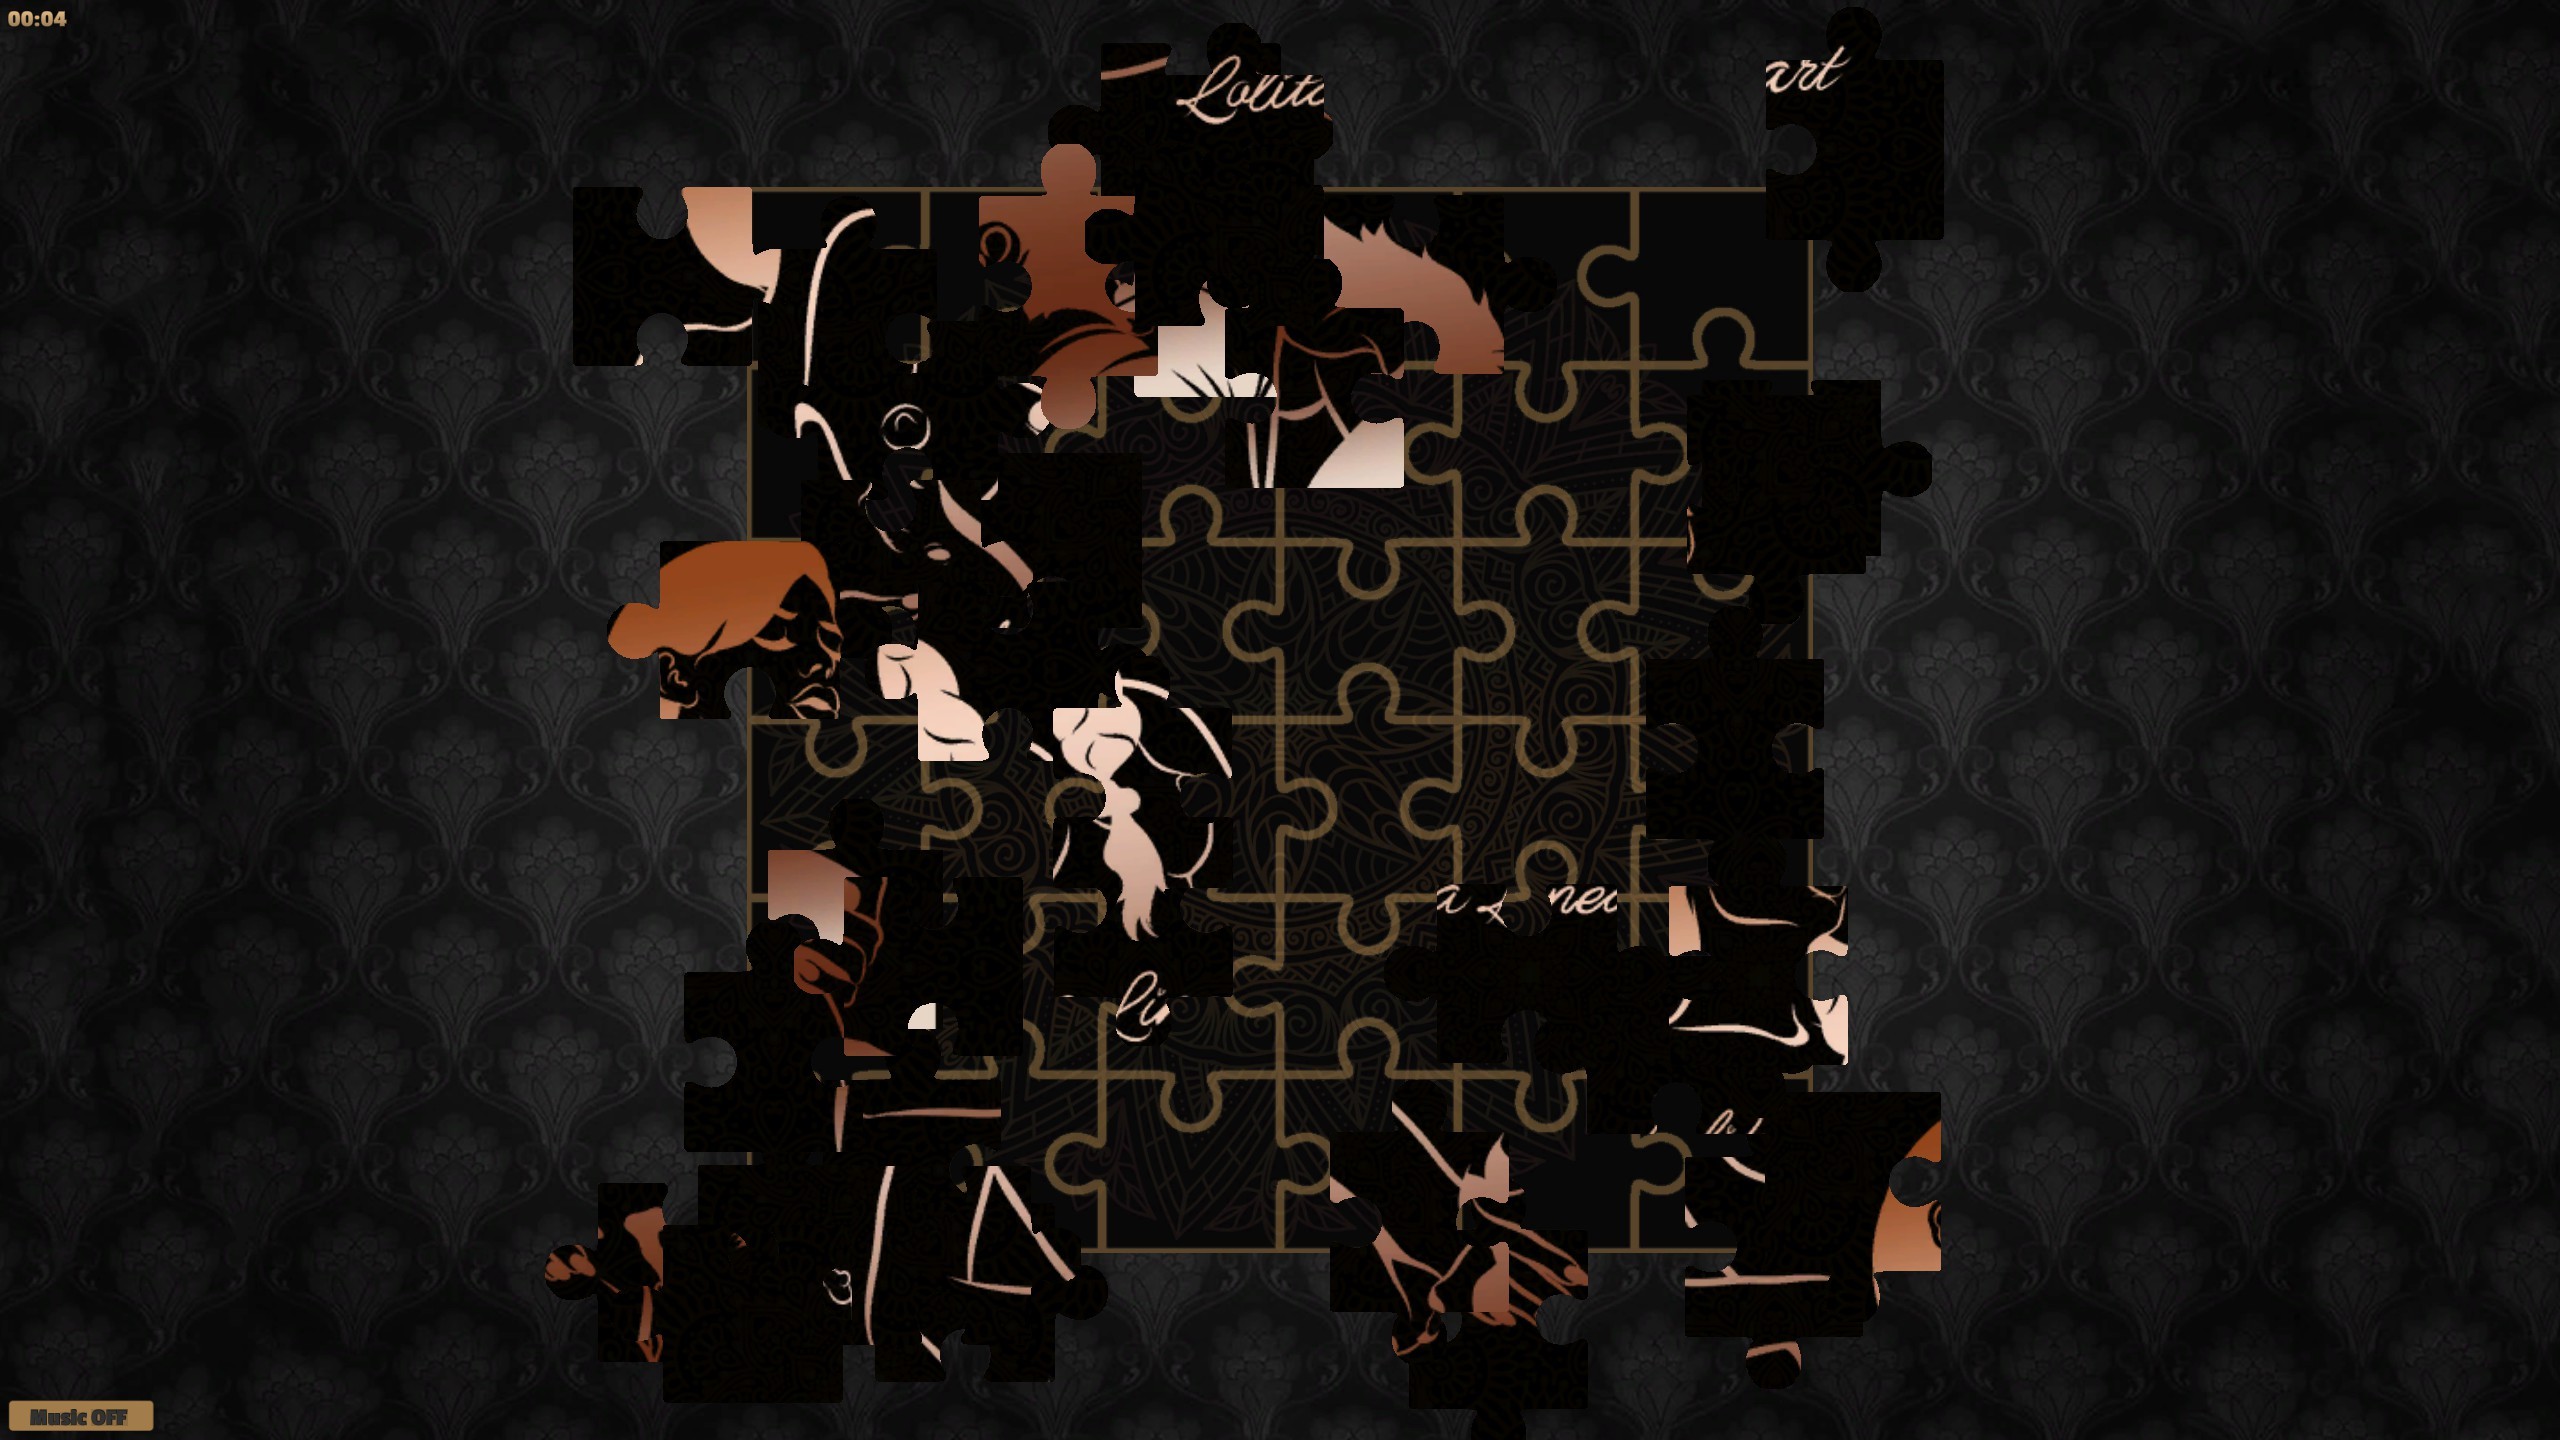 Erotic Jigsaw Puzzle 4 + Artbook DLC Steam CD Key